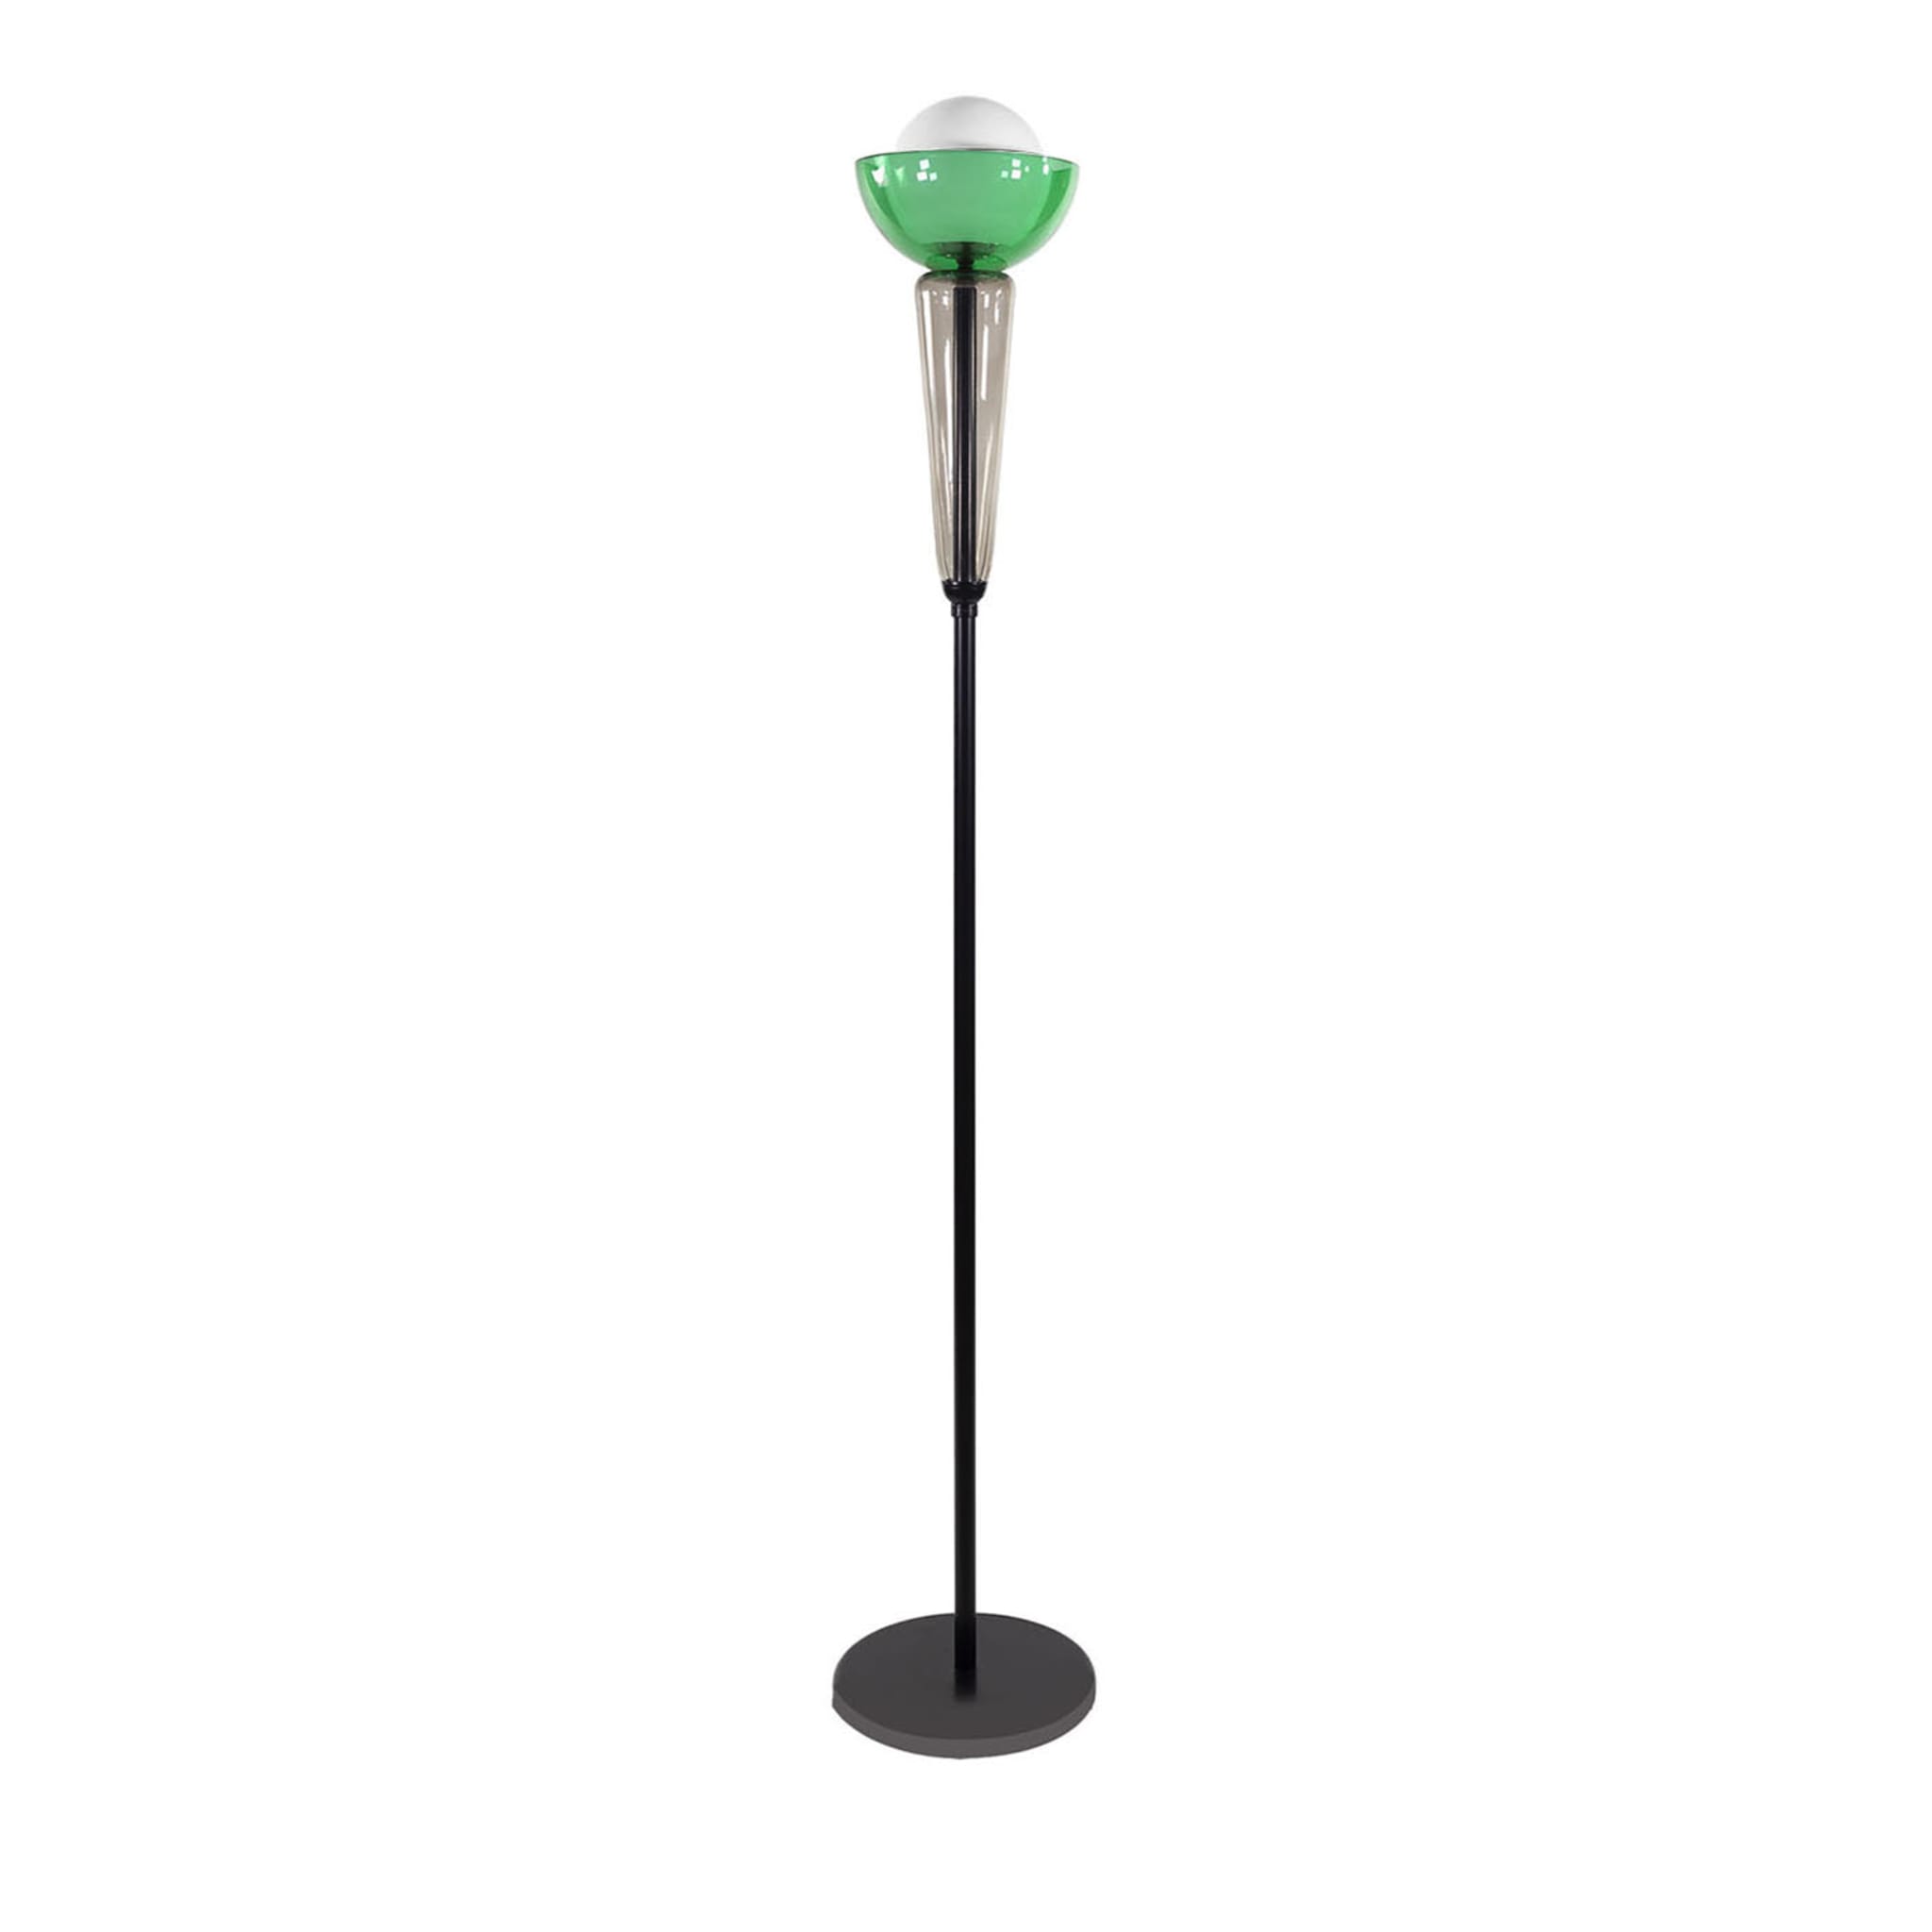 Cioppo PT Green Glass Floor Lamp - Main view